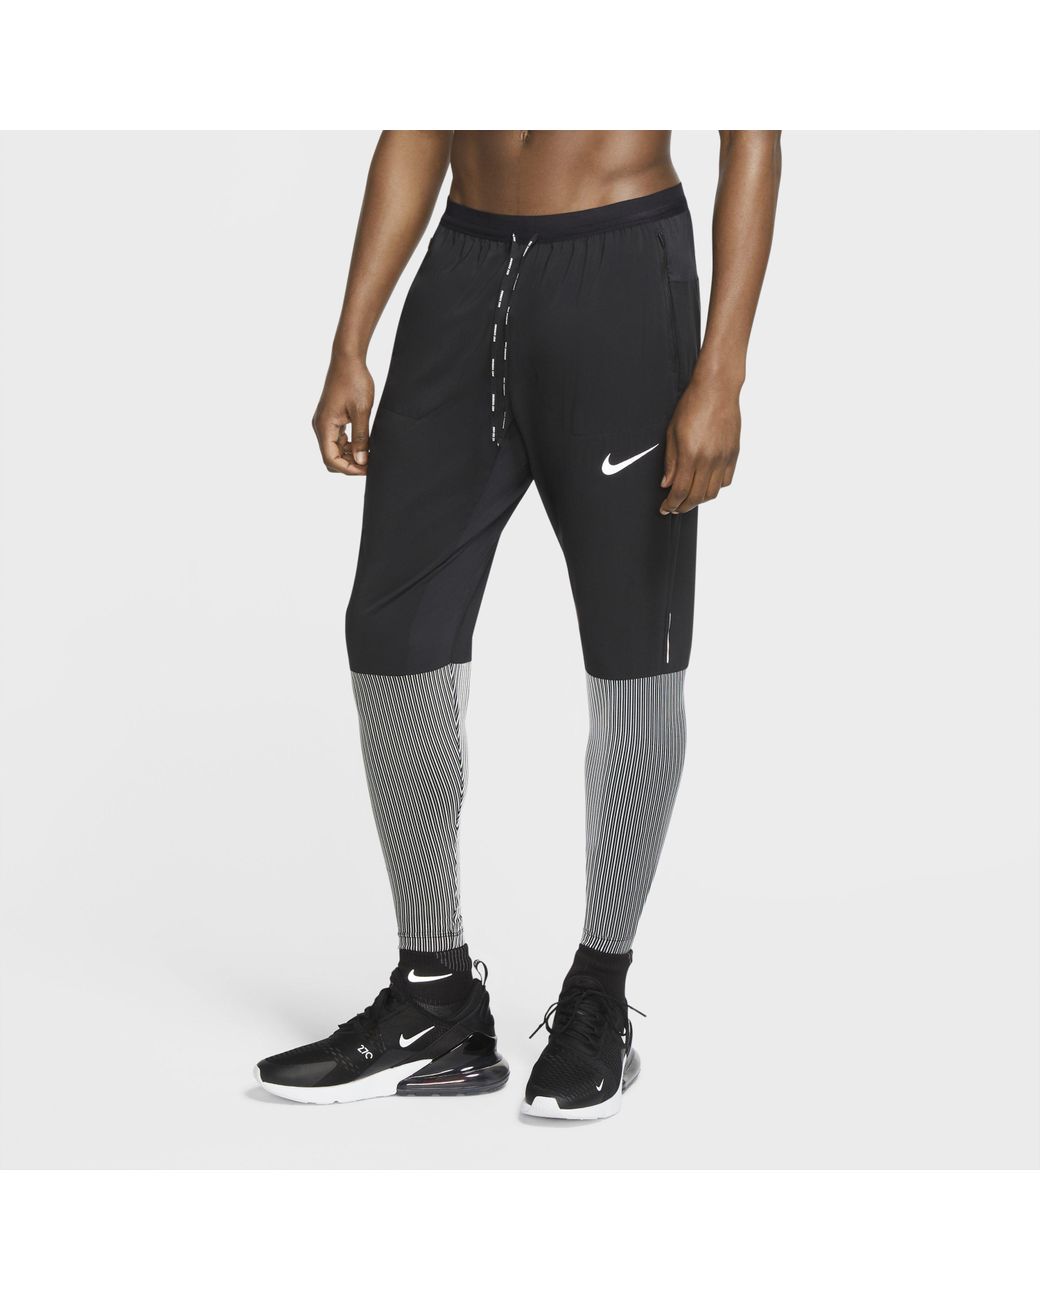 Nike Swift Mens Running Pants CU5493077 M LT Smoke GreySmoke  GreyBLKREF  Amazonin Shoes  Handbags